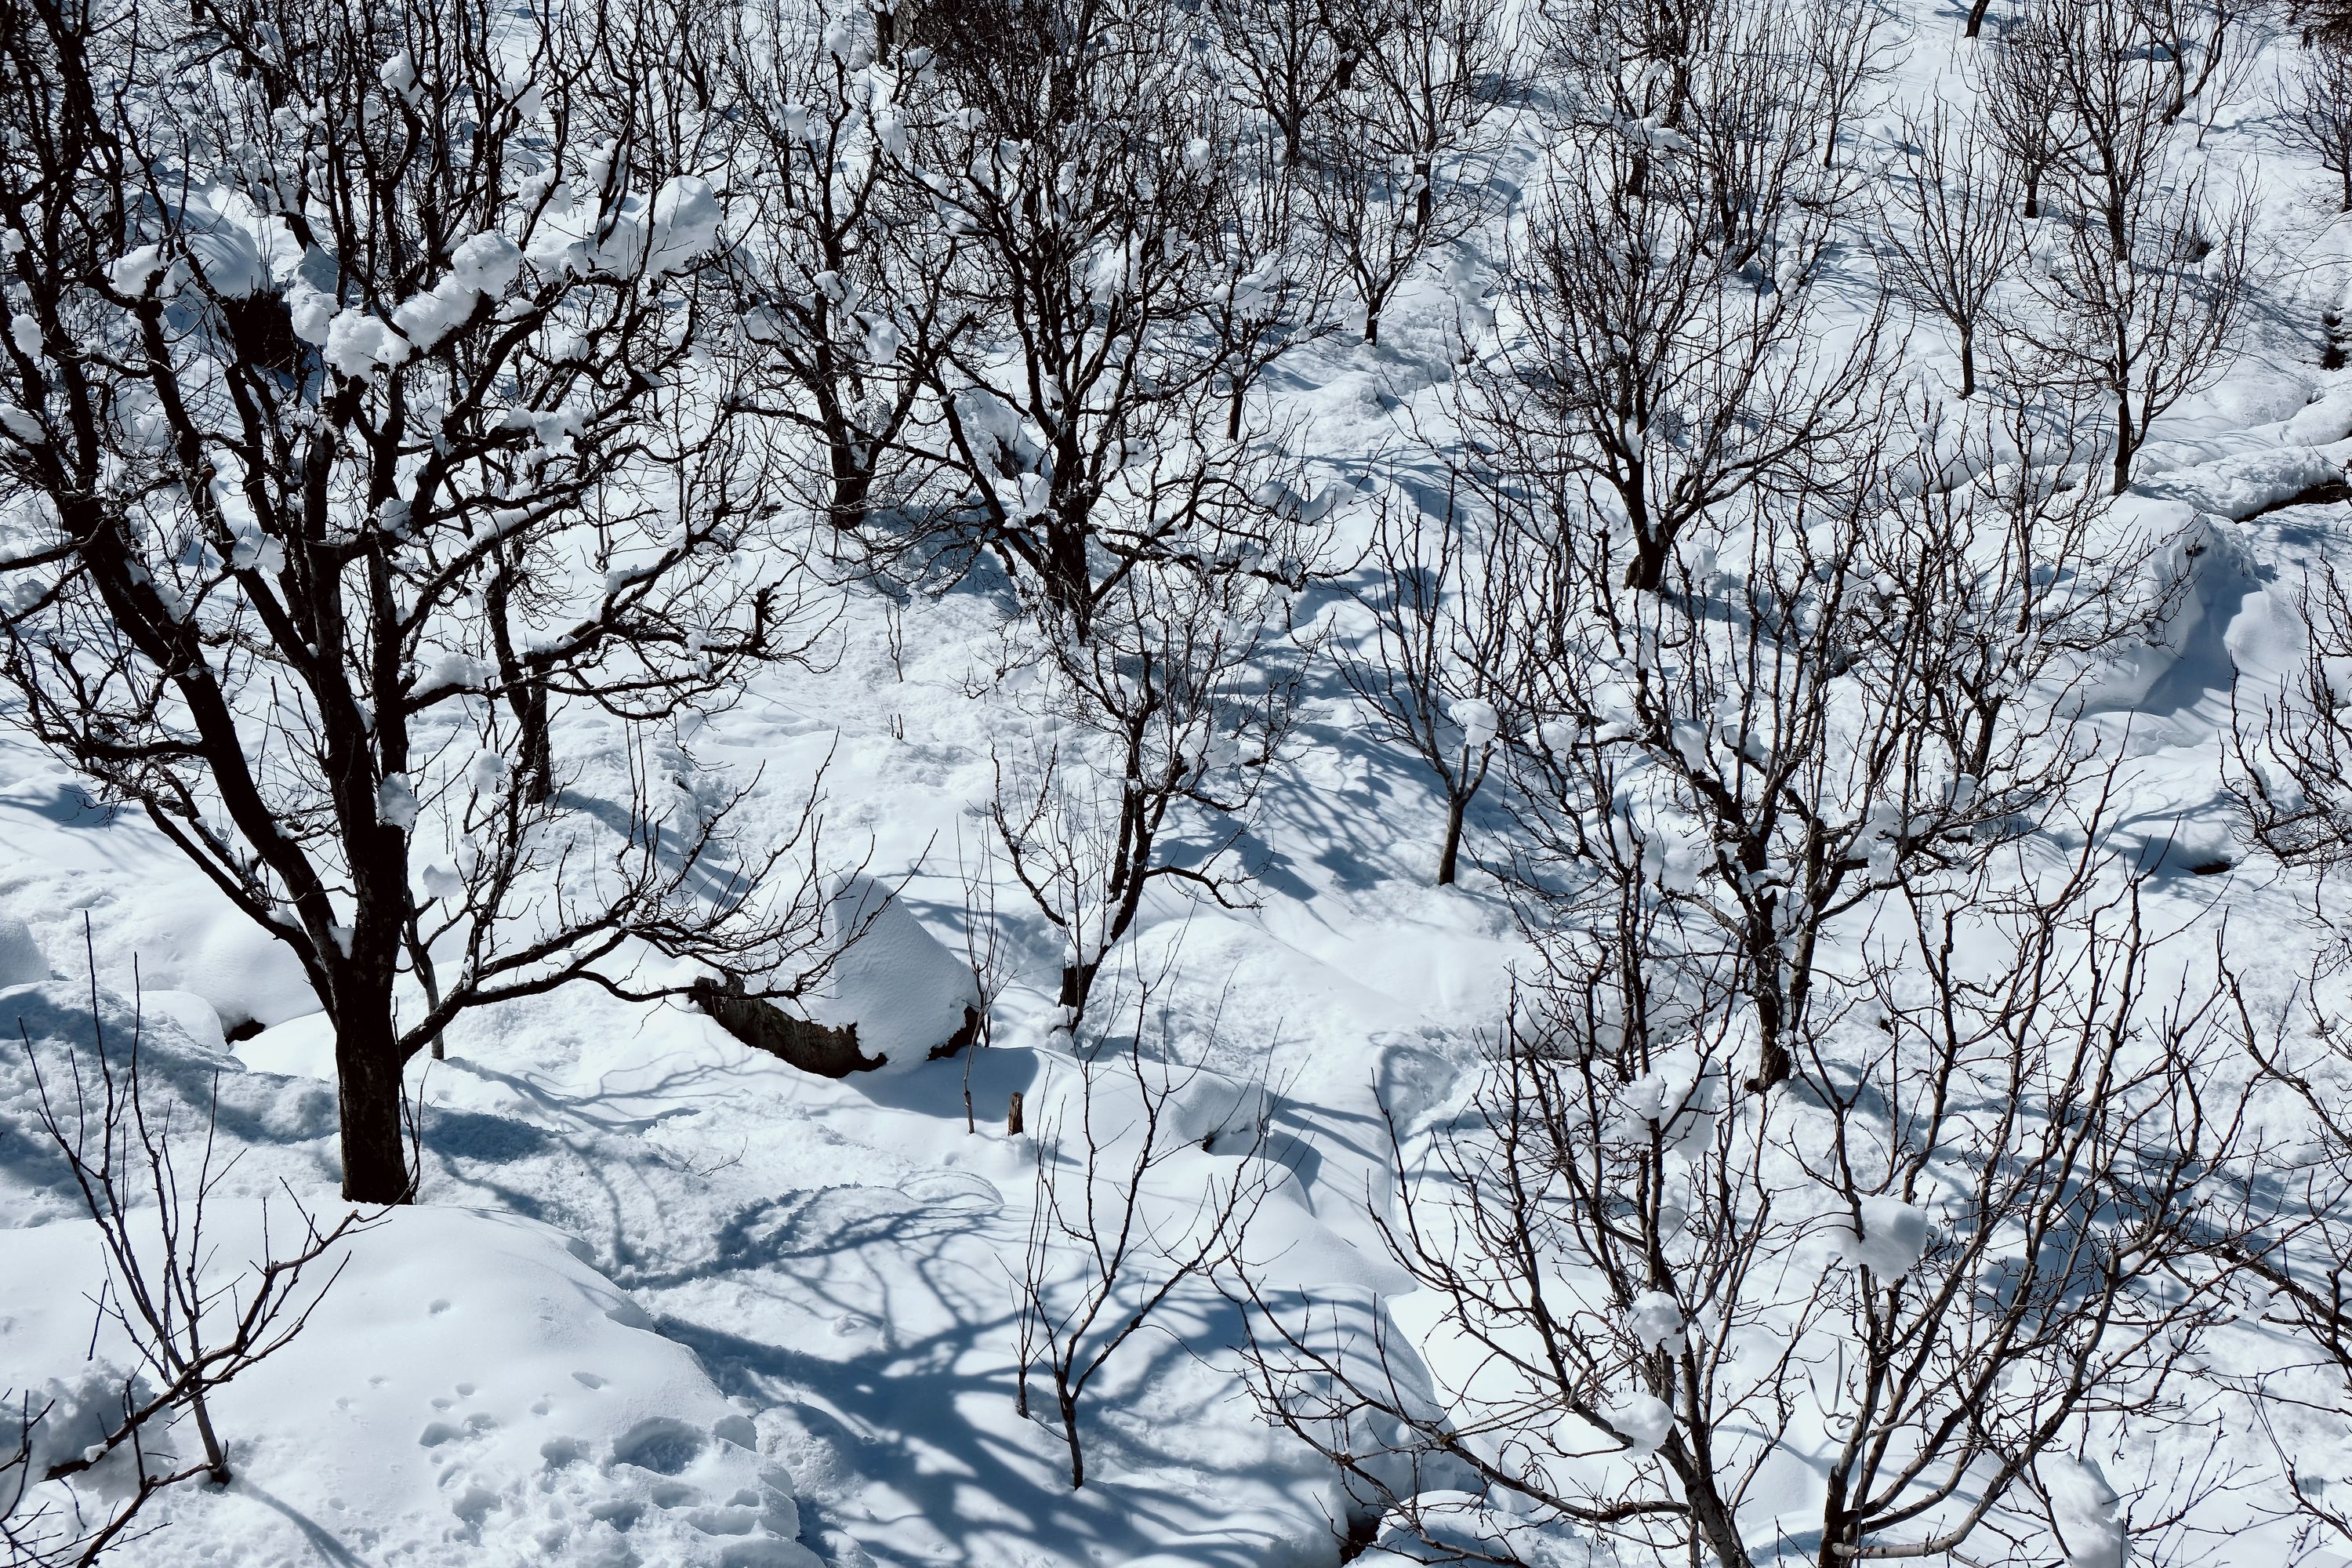 Snow in the apple orchard. Vashisht, Himachal Pradesh, India. February 2022.